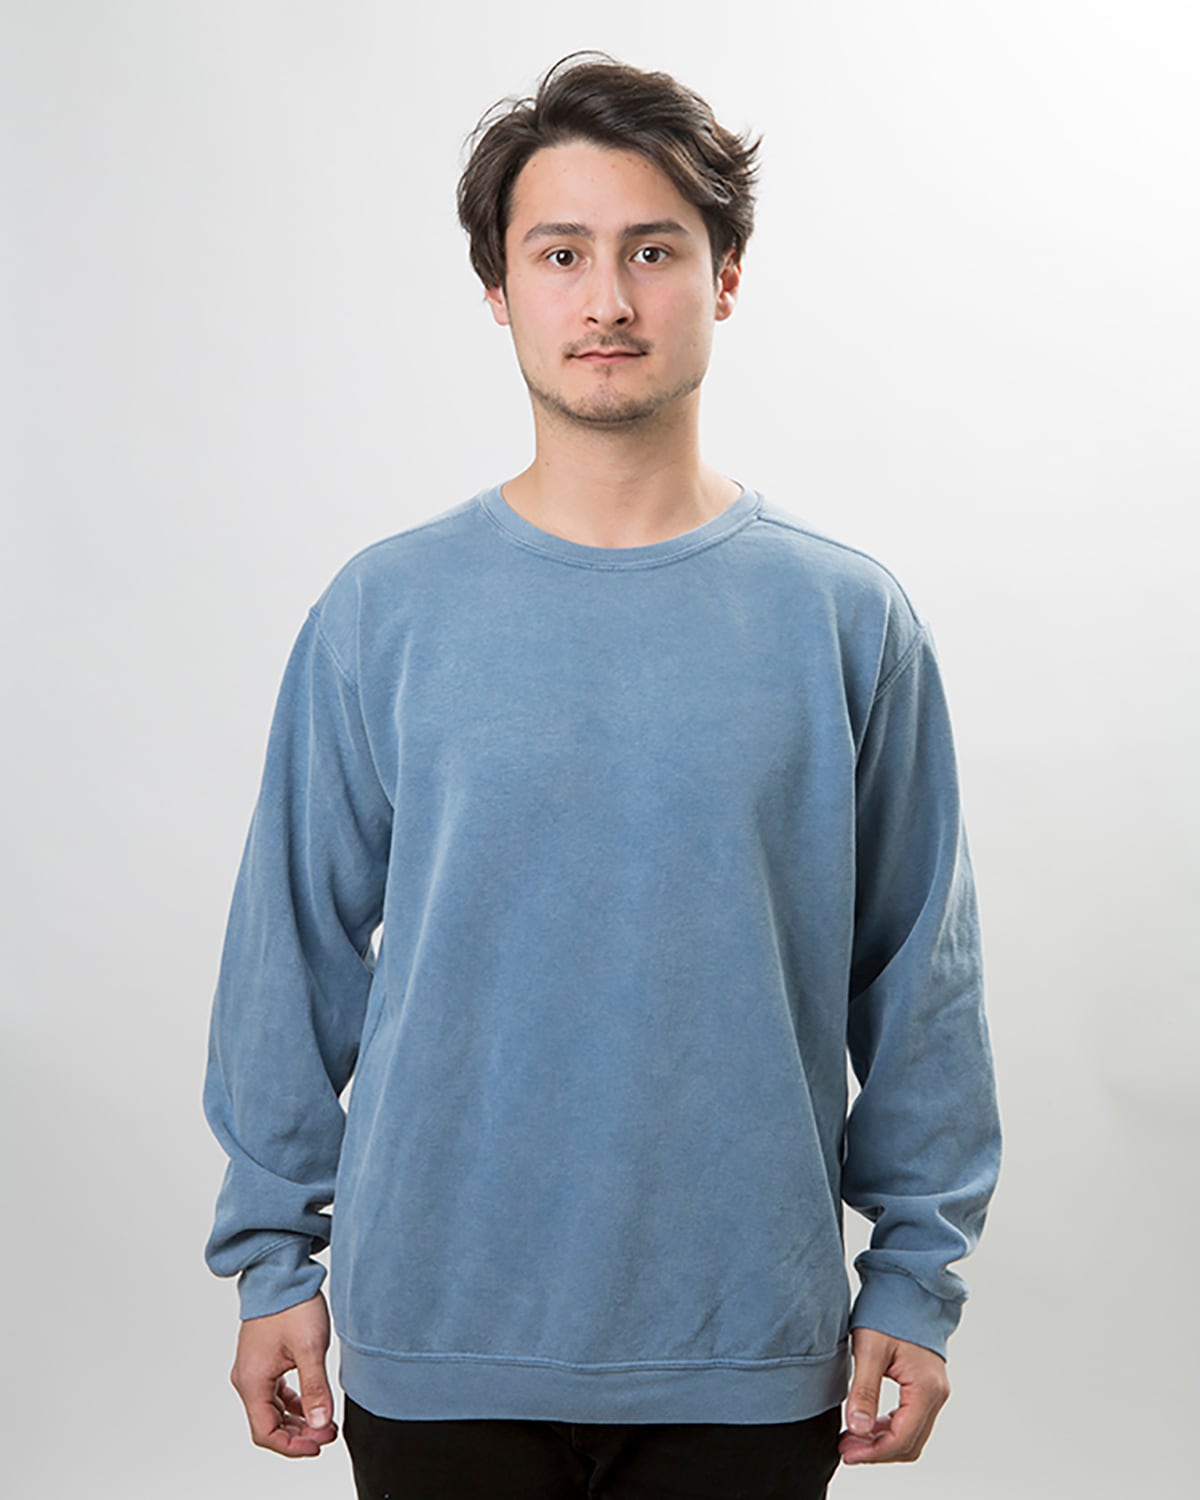 9.5oz Garment Dyed Crewneck Sweatshirt (CC-1566)